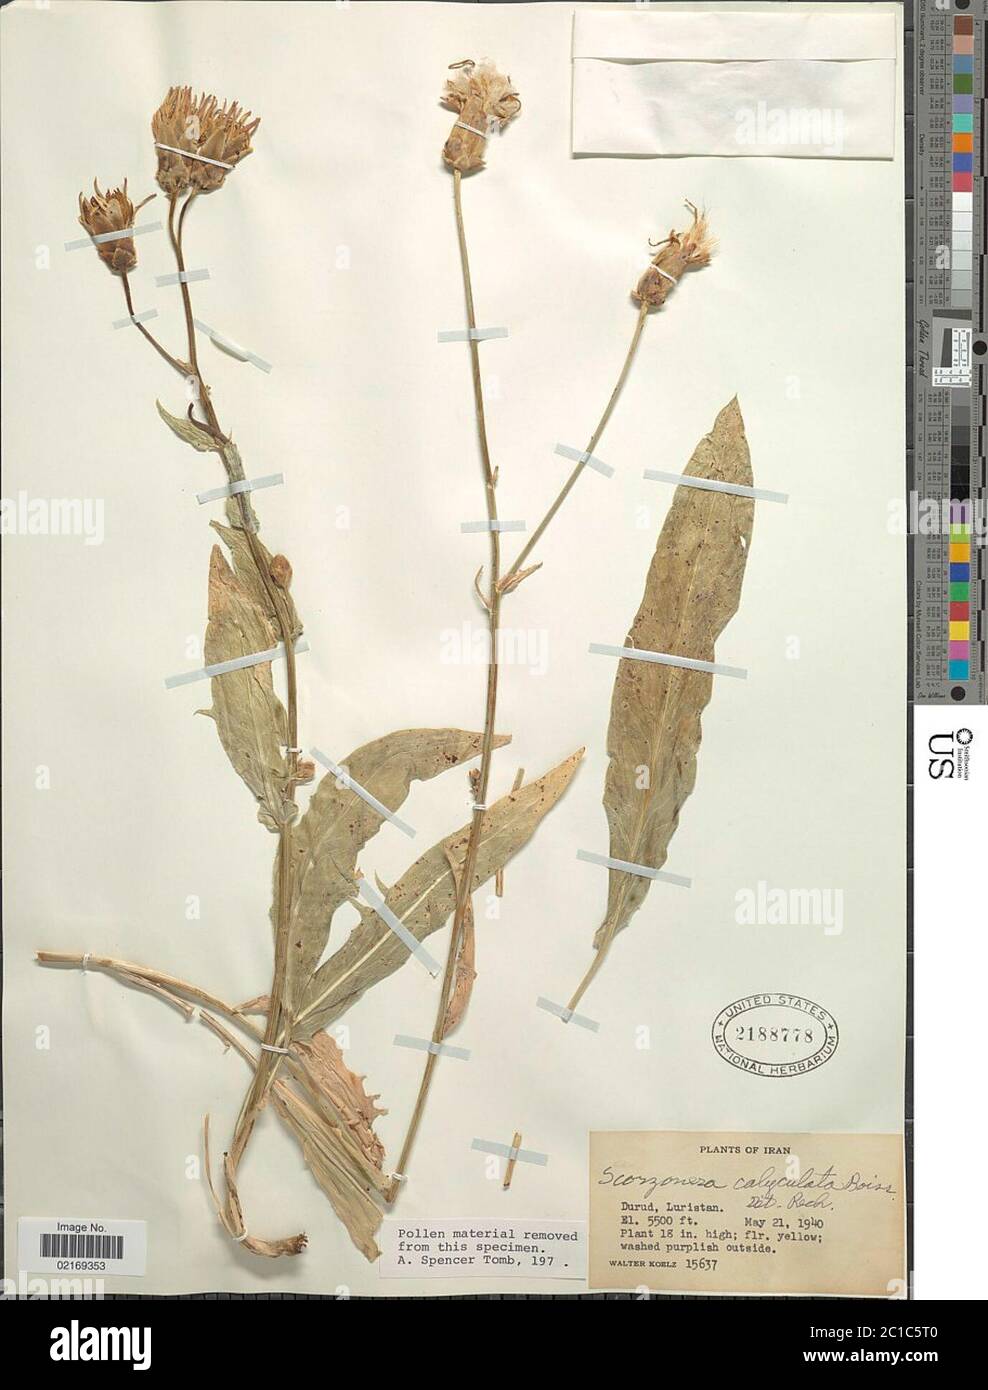 Scorzonera calyculata Boiss Scorzonera calyculata Boiss. Stock Photo